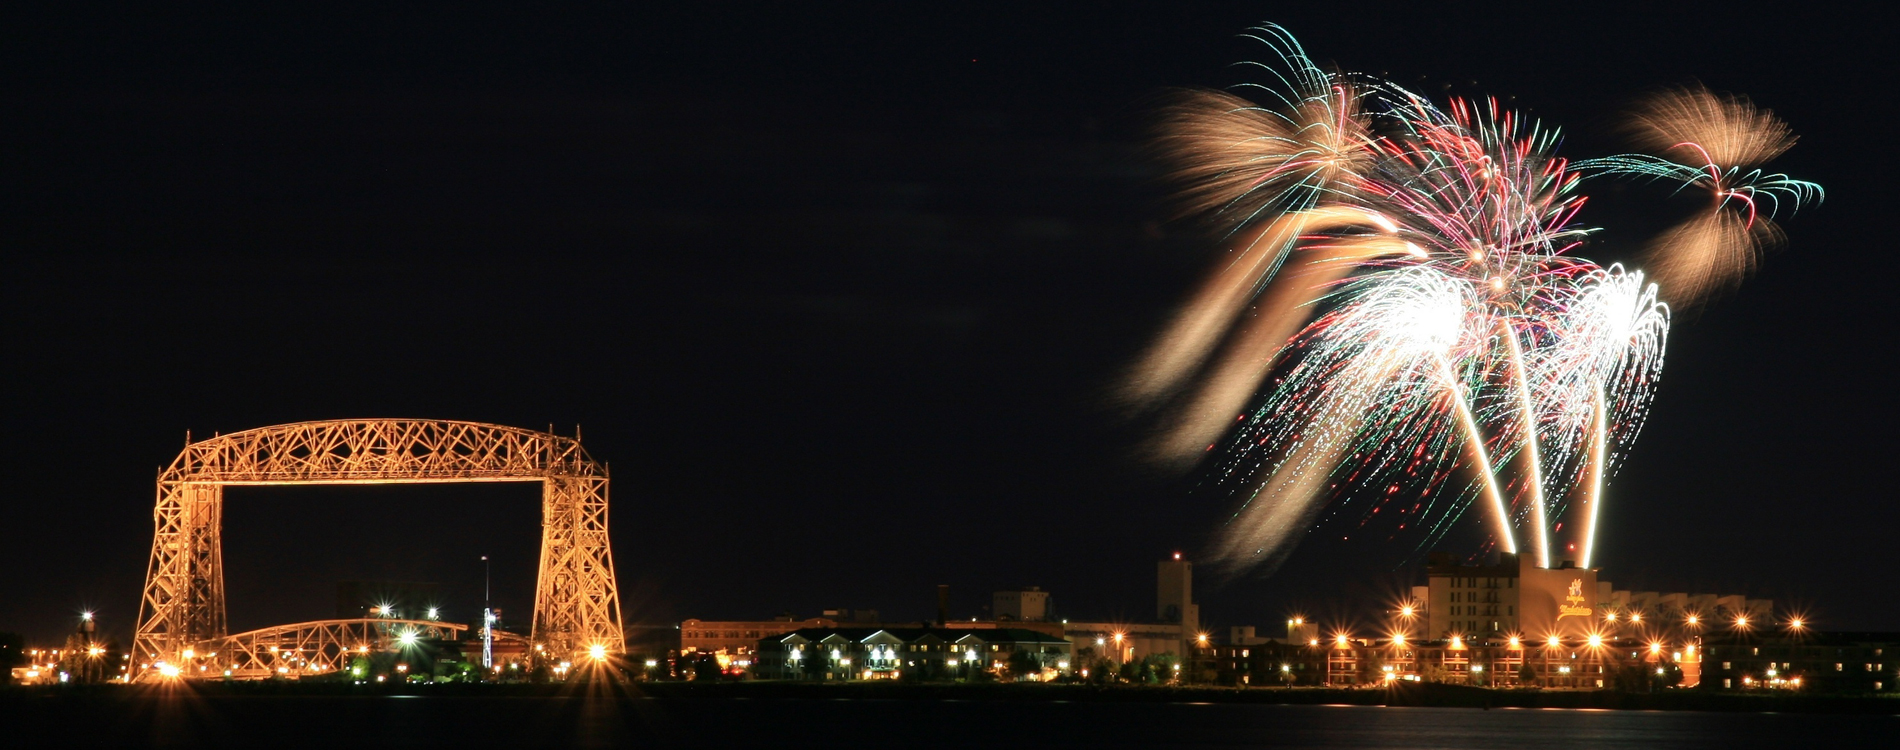 Duluth, MN - Fireworks